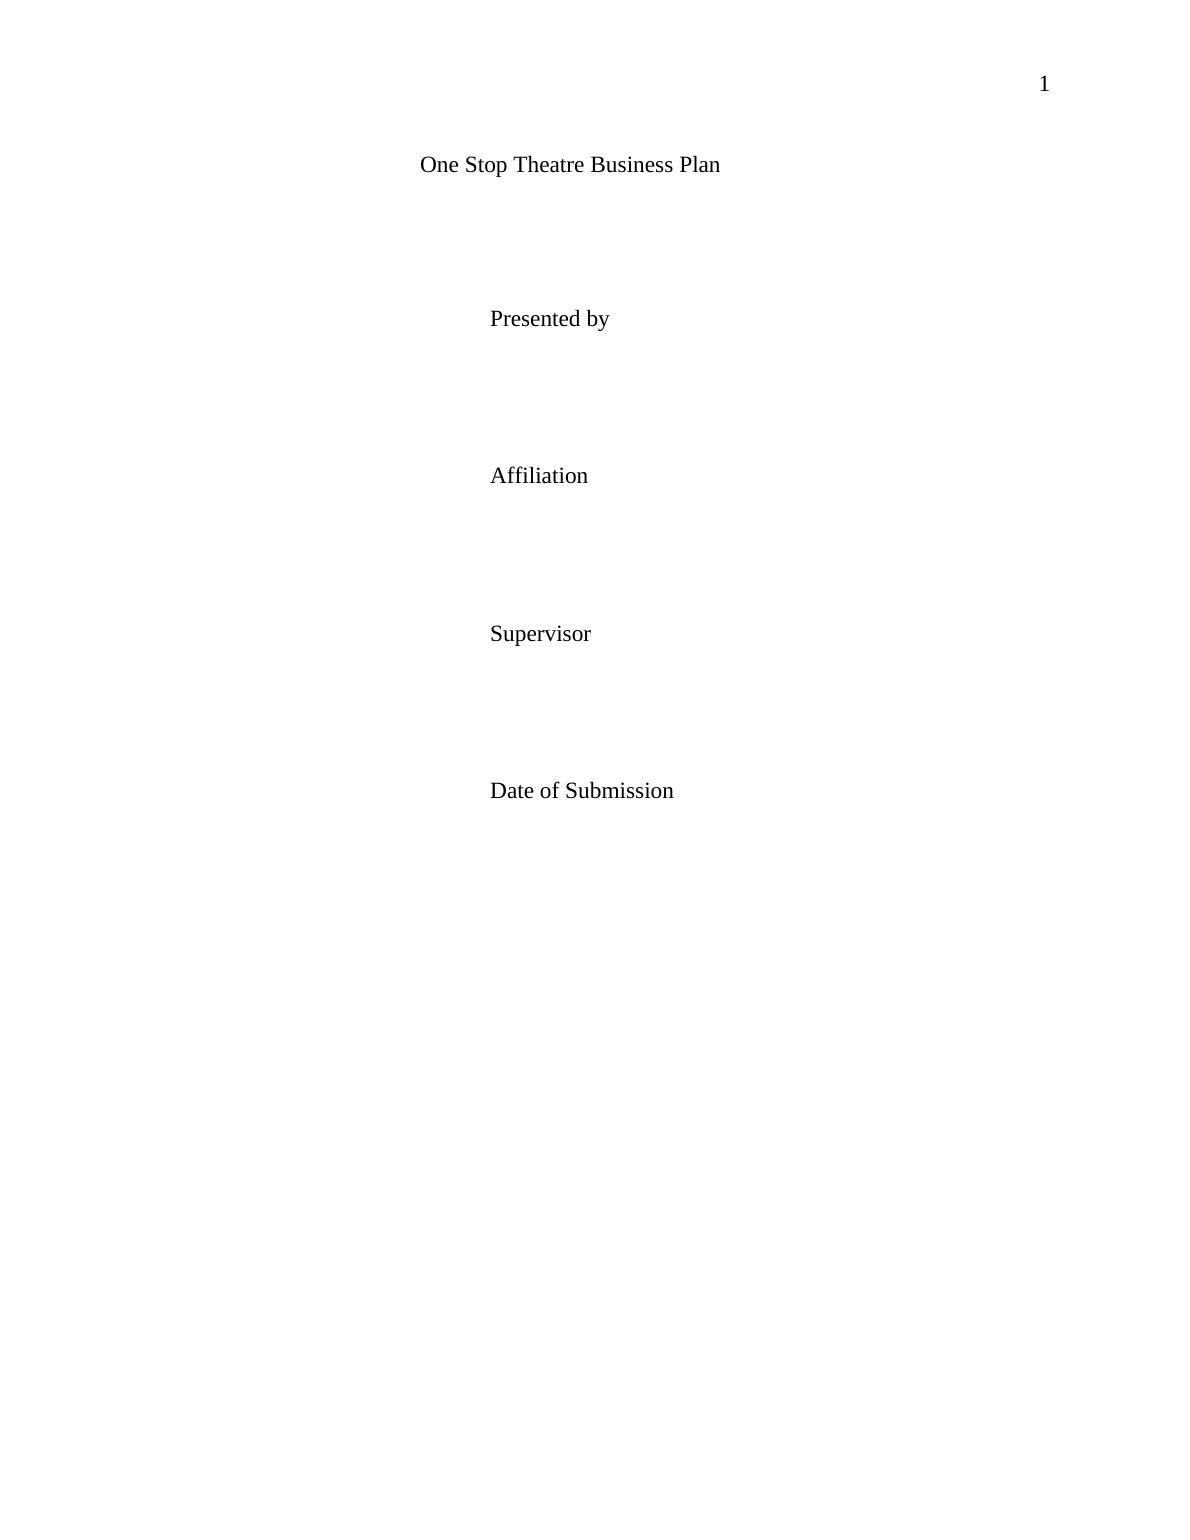 Business Plan  -  Assignment Sample PDF_1